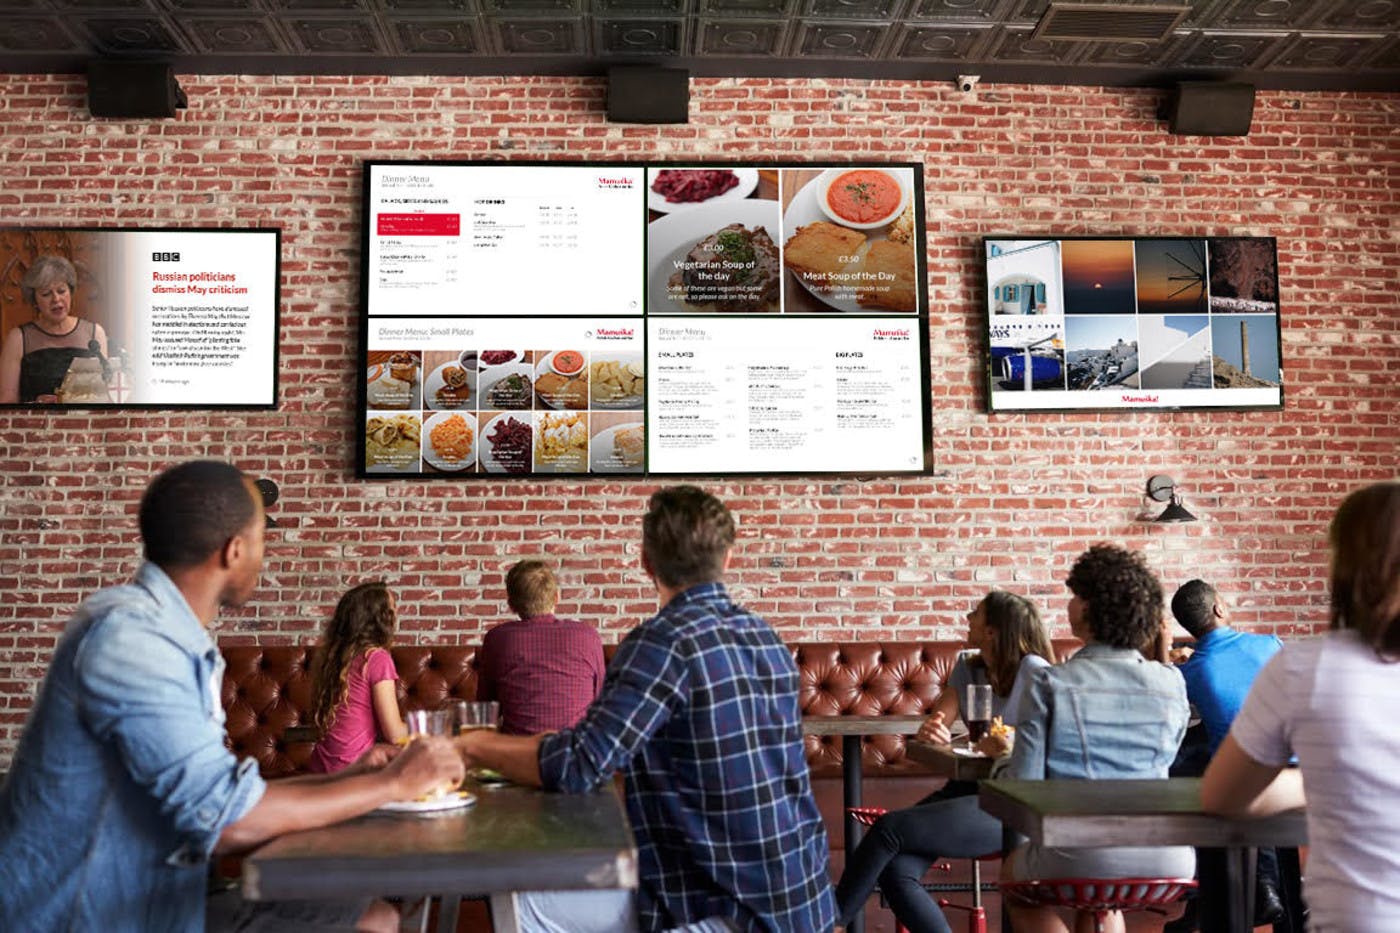 Digital screens in a Restaurant. Source: ScreenCloud - Restaurant Digital Signage